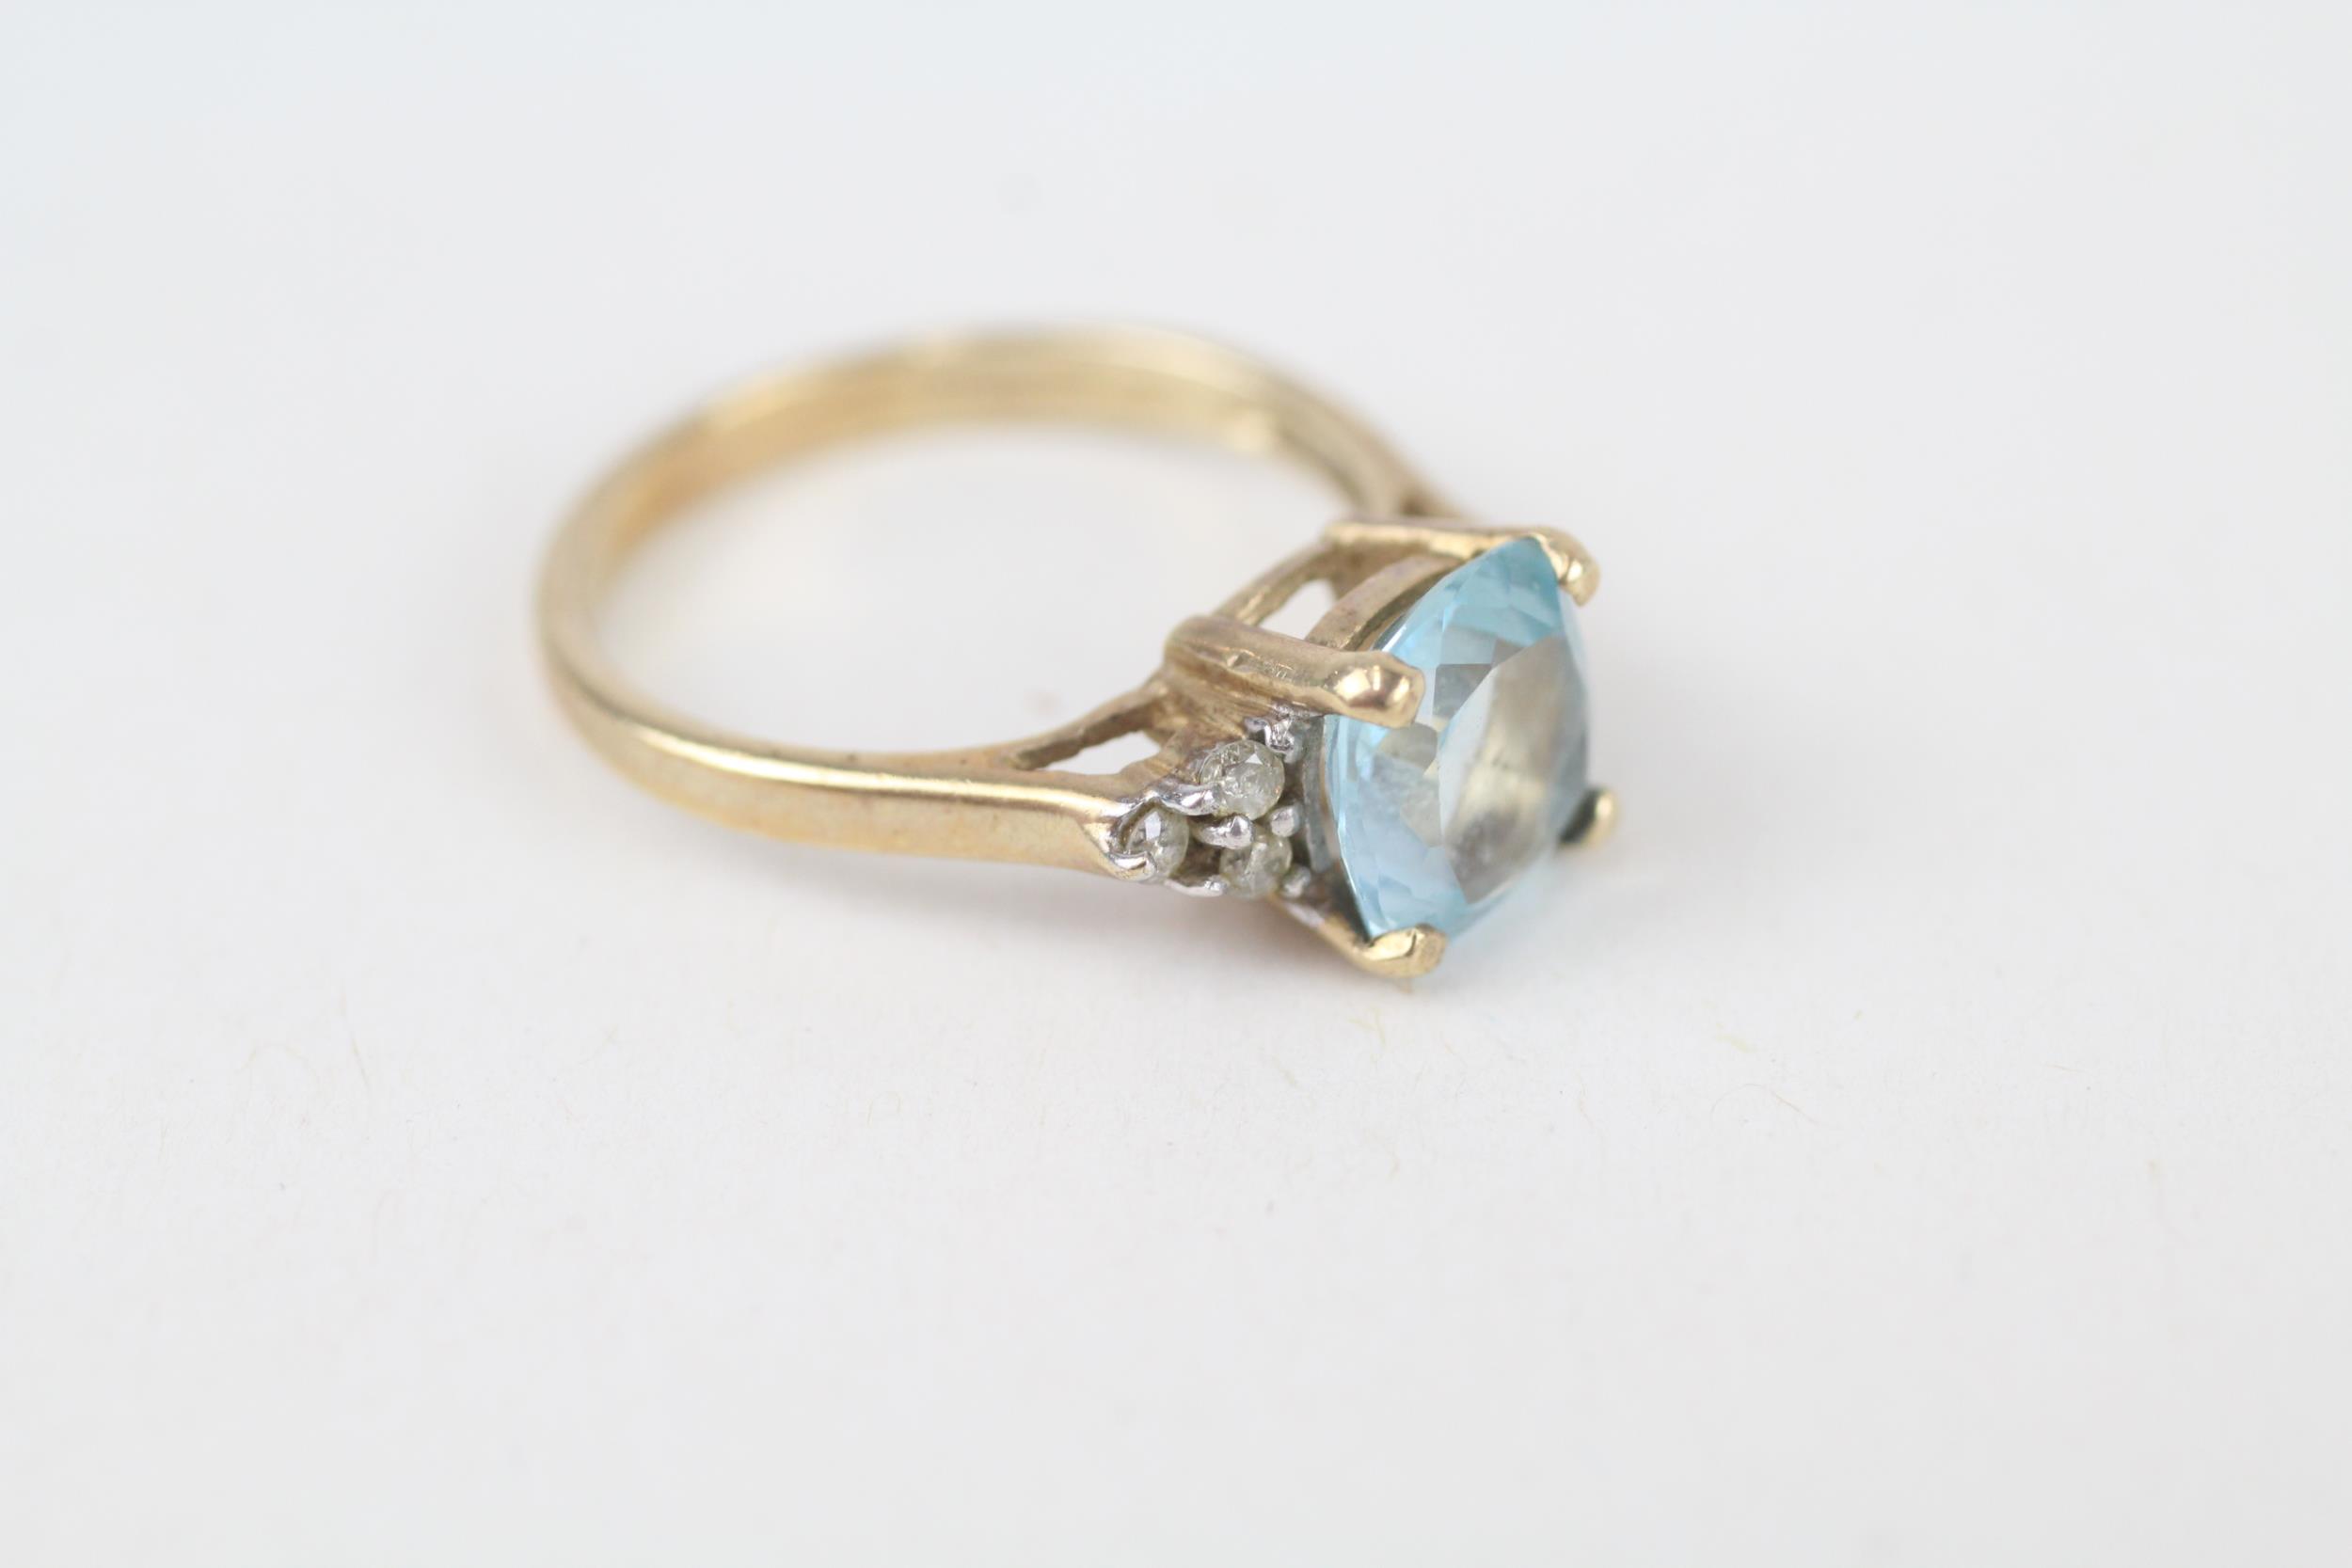 9ct gold diamond & topaz trefoil ring - as seen Size M 2.7 g - Image 2 of 4